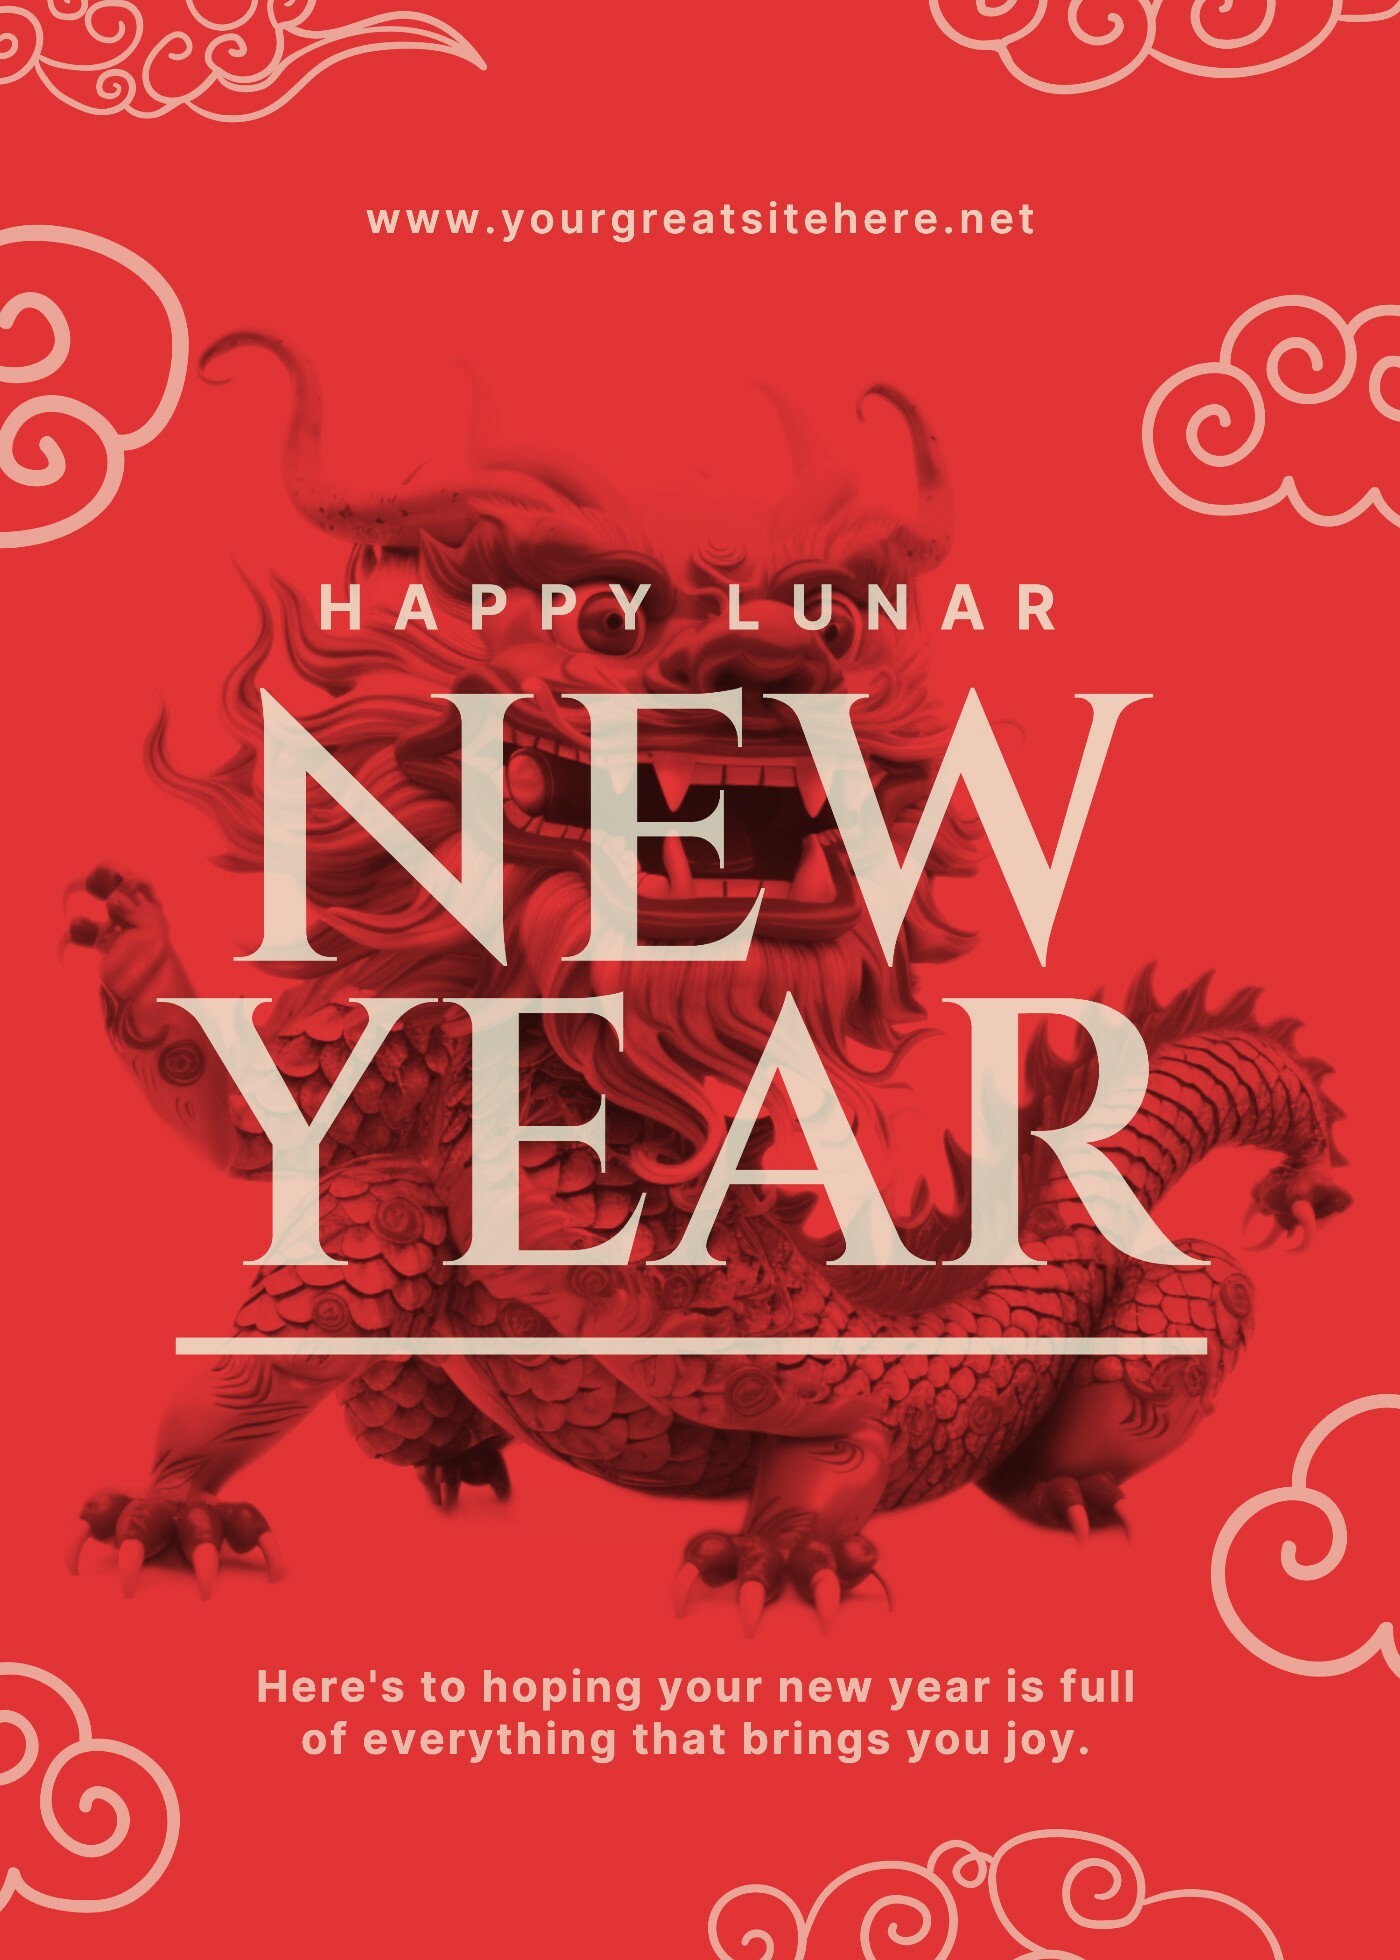 Lunar New Year Greeting Cards